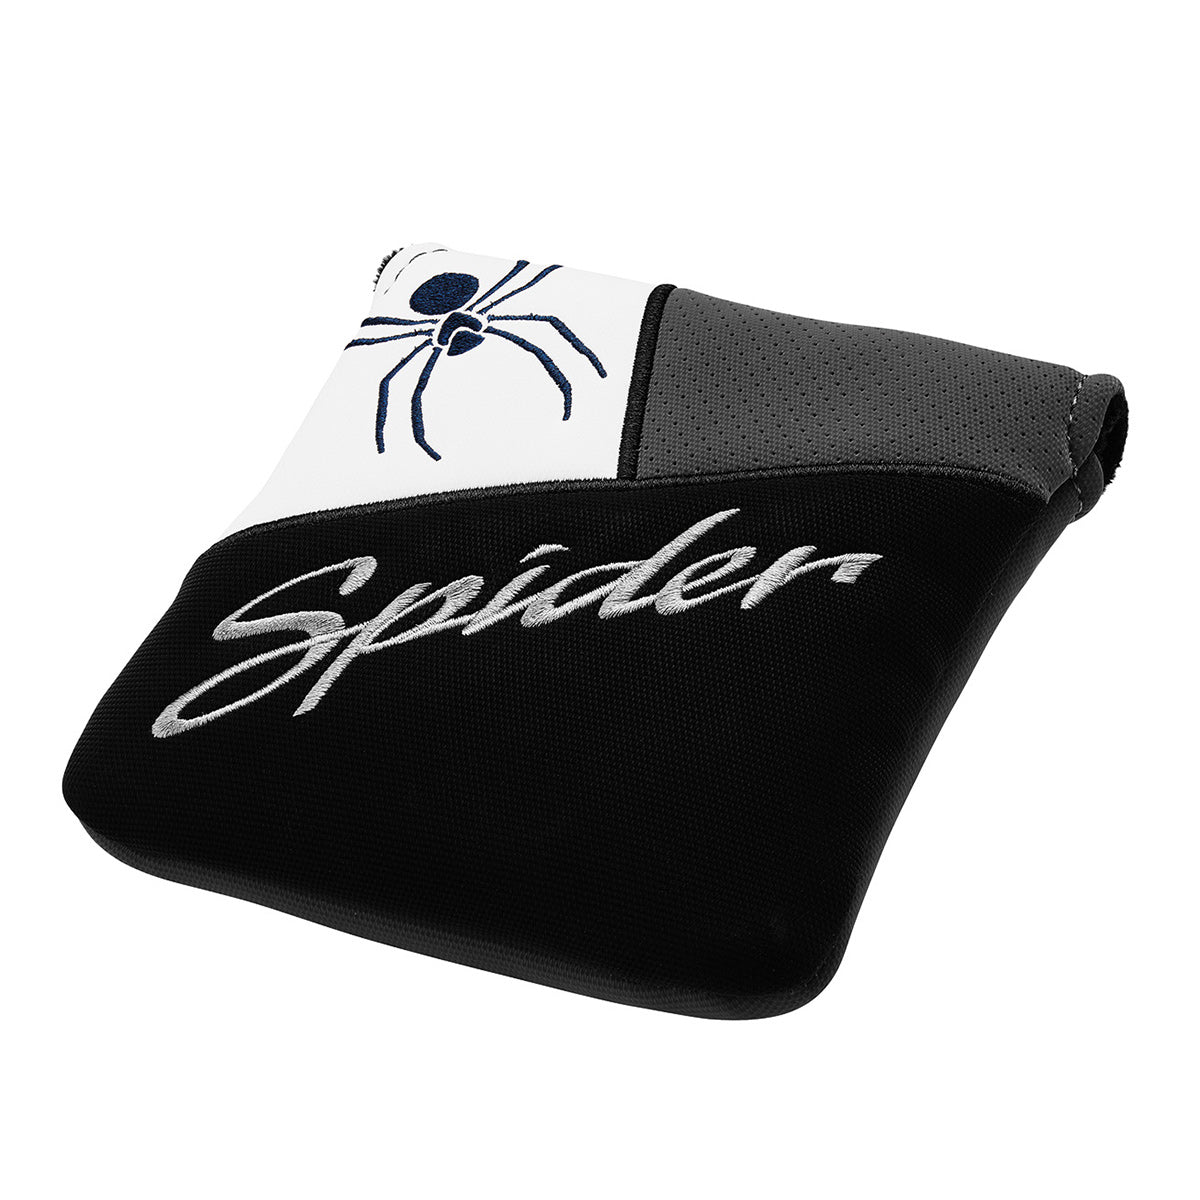 Spider Tour V Putter V3 34"